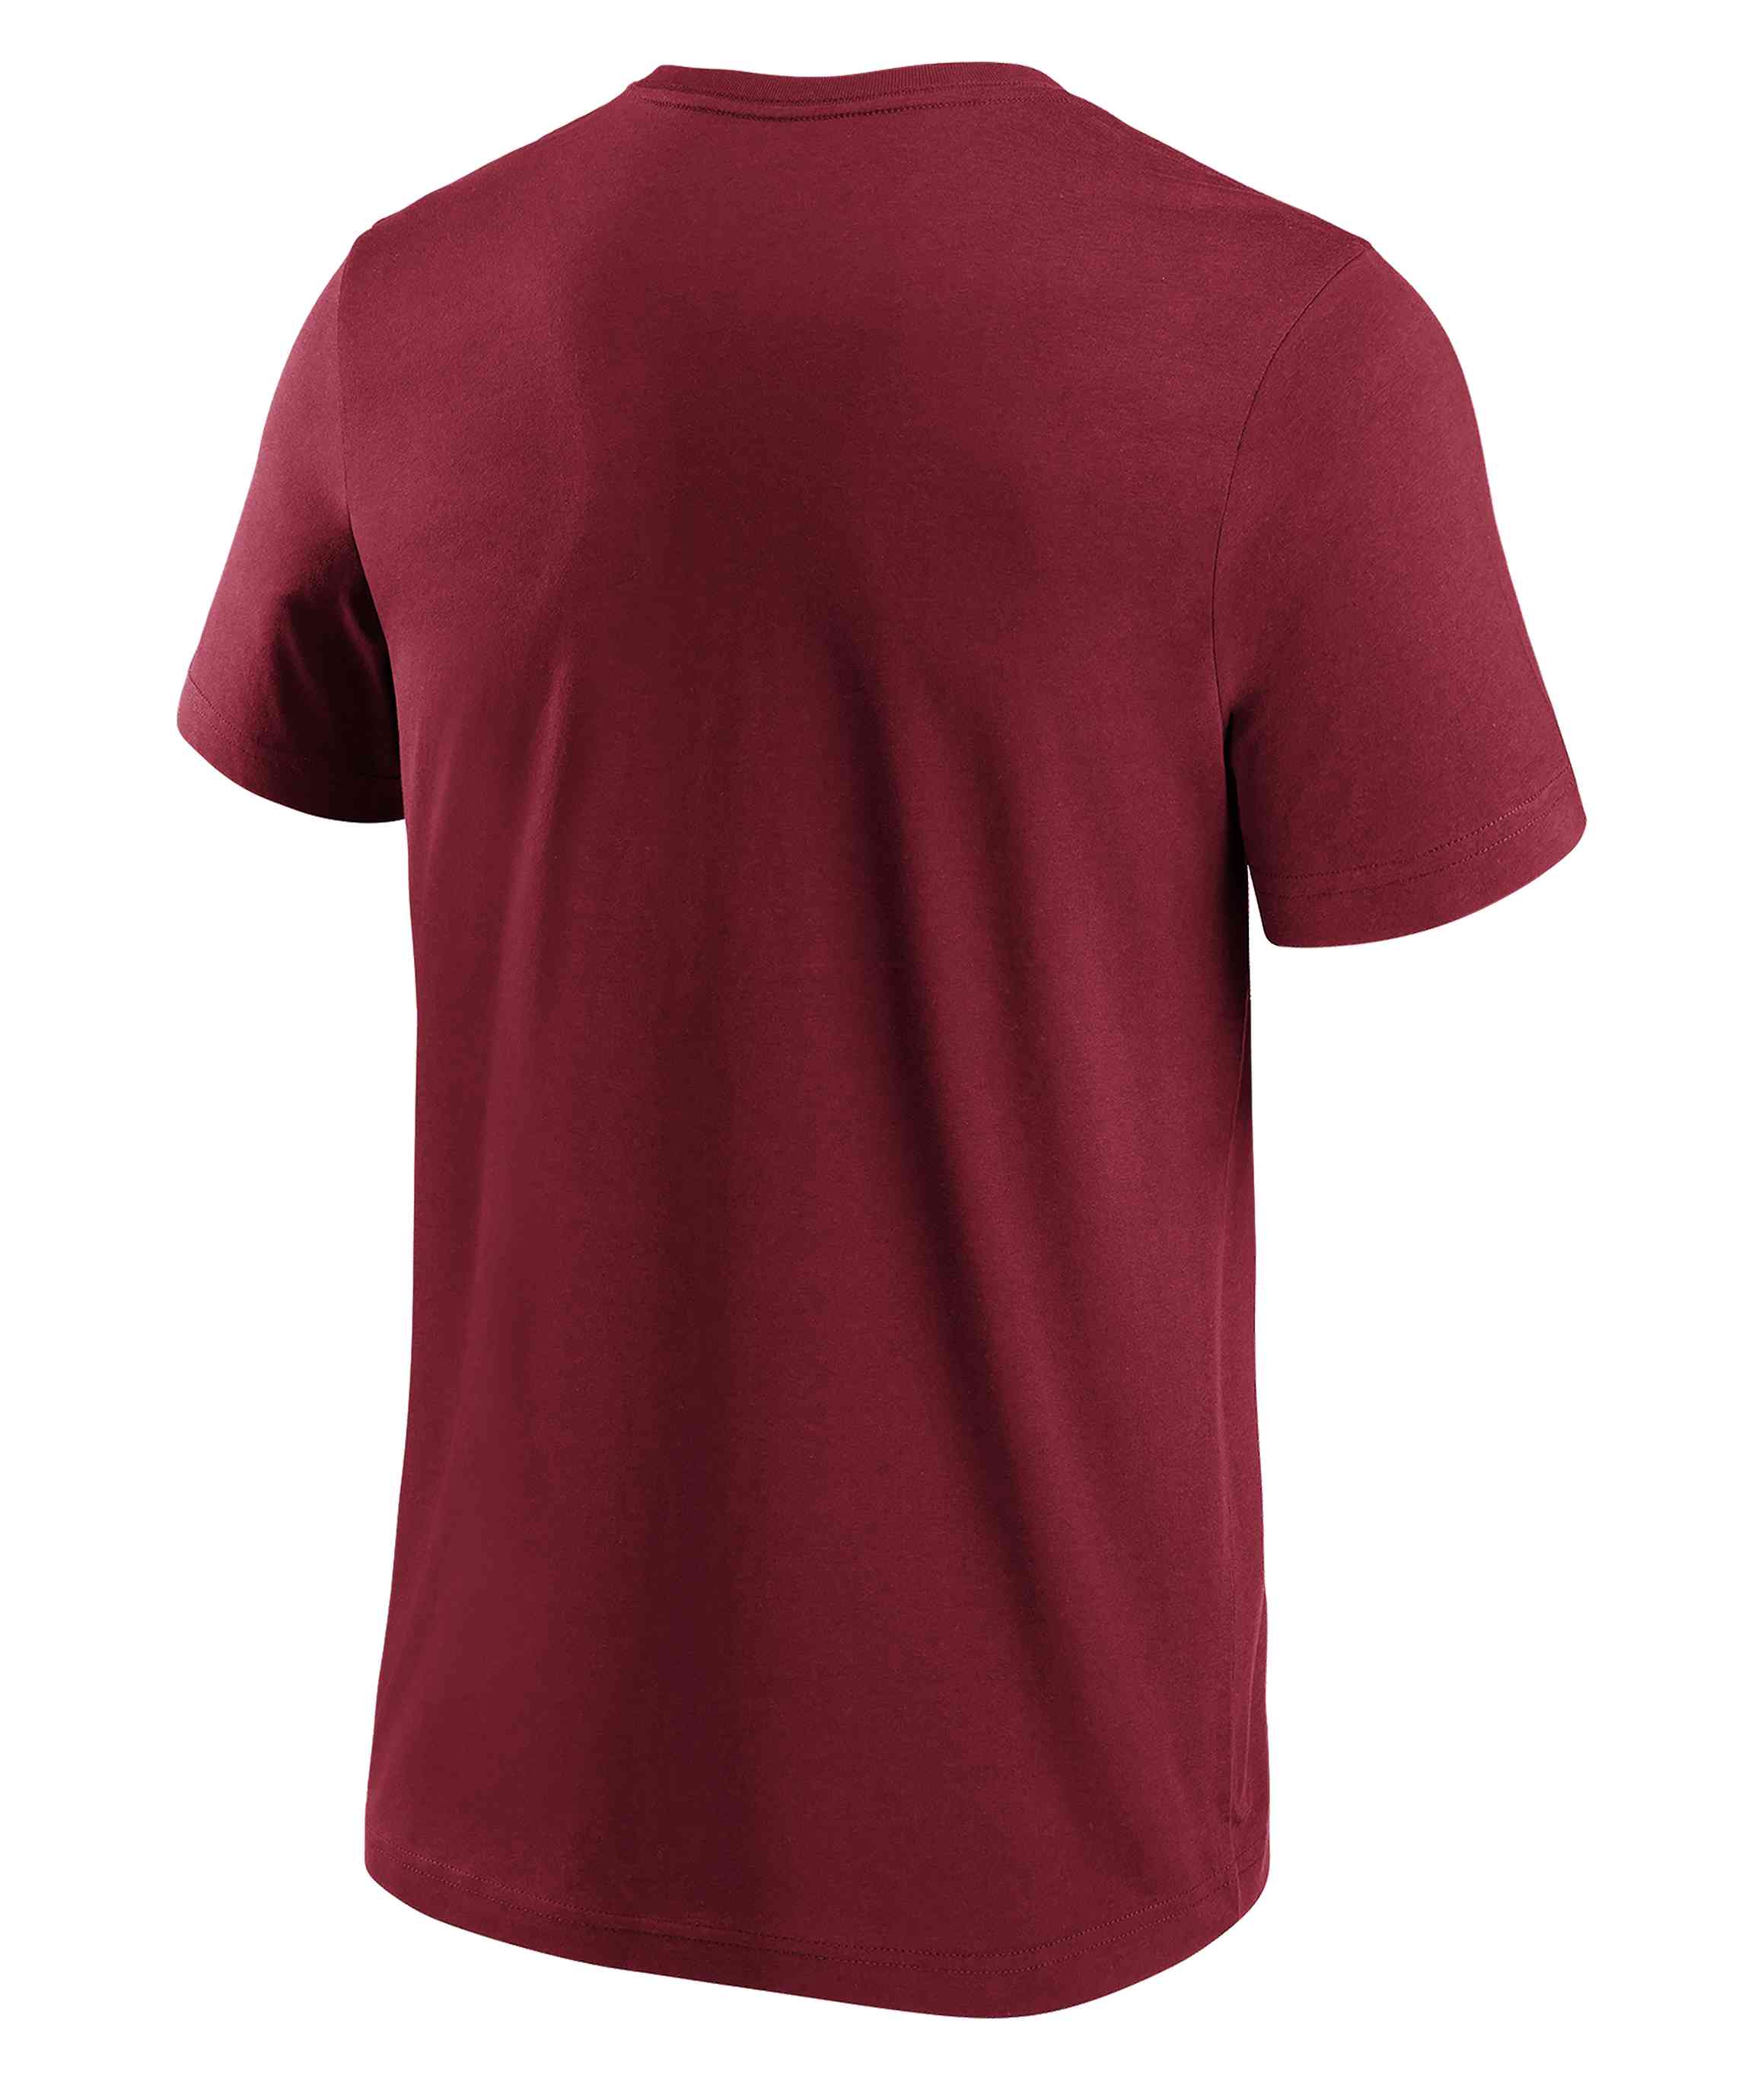 Fanatics - NFL Arizona Cardinals Primary Logo Graphic T-Shirt